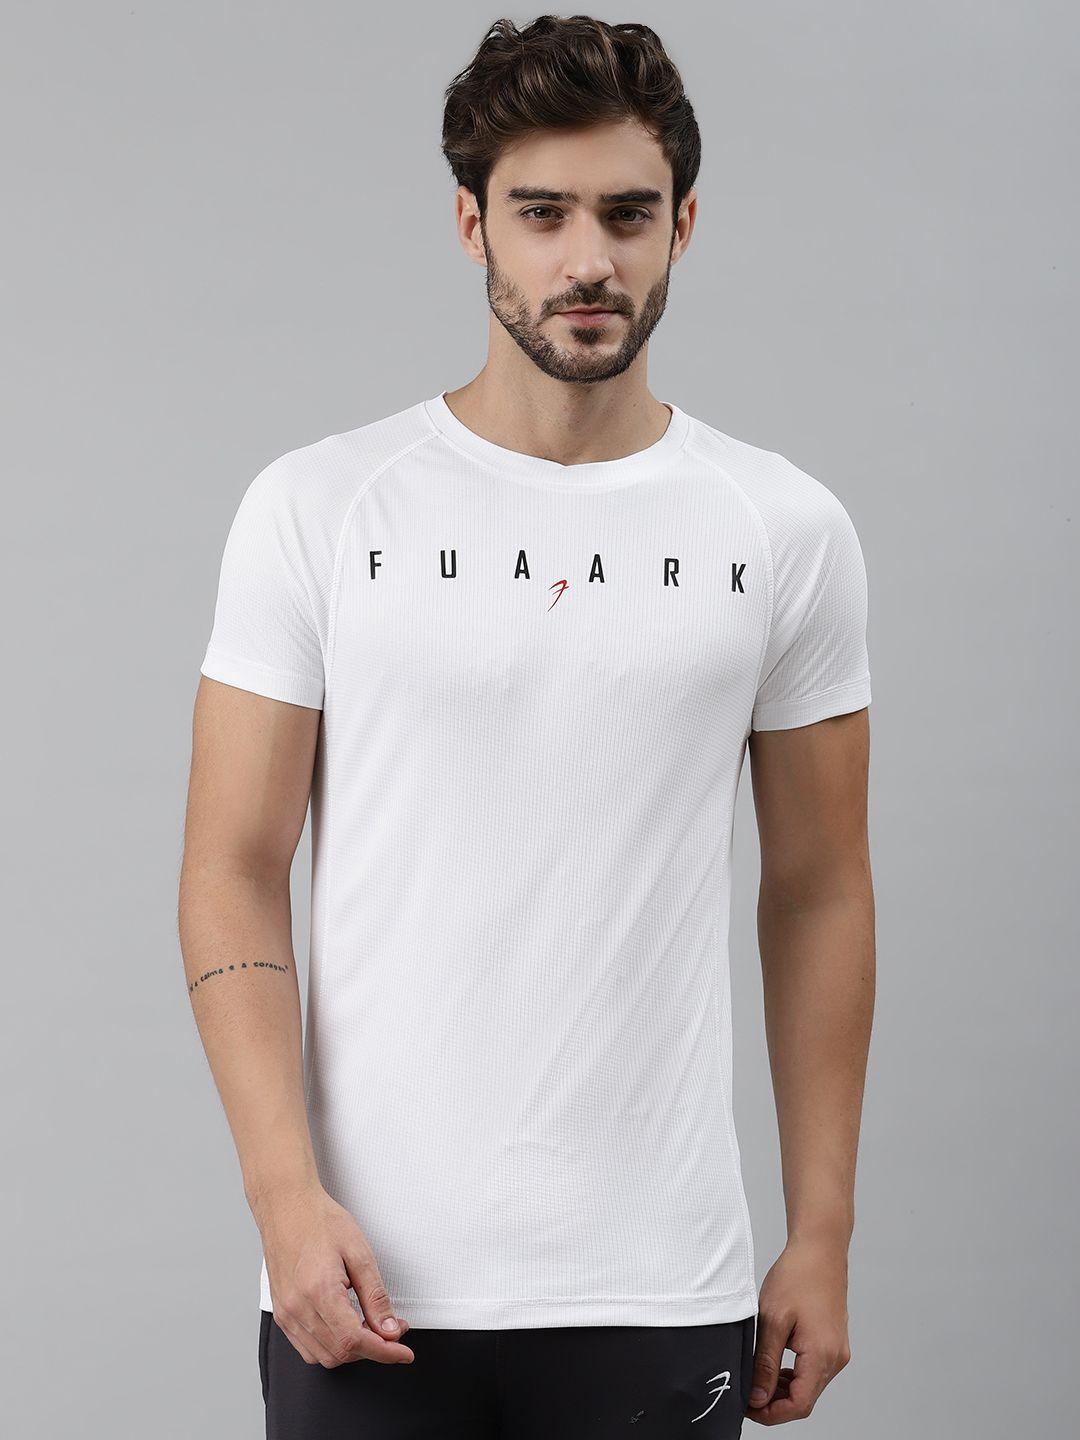 fuaark-men-white-&-black-brand-logo-print-slim-fit-round-neck-t-shirt